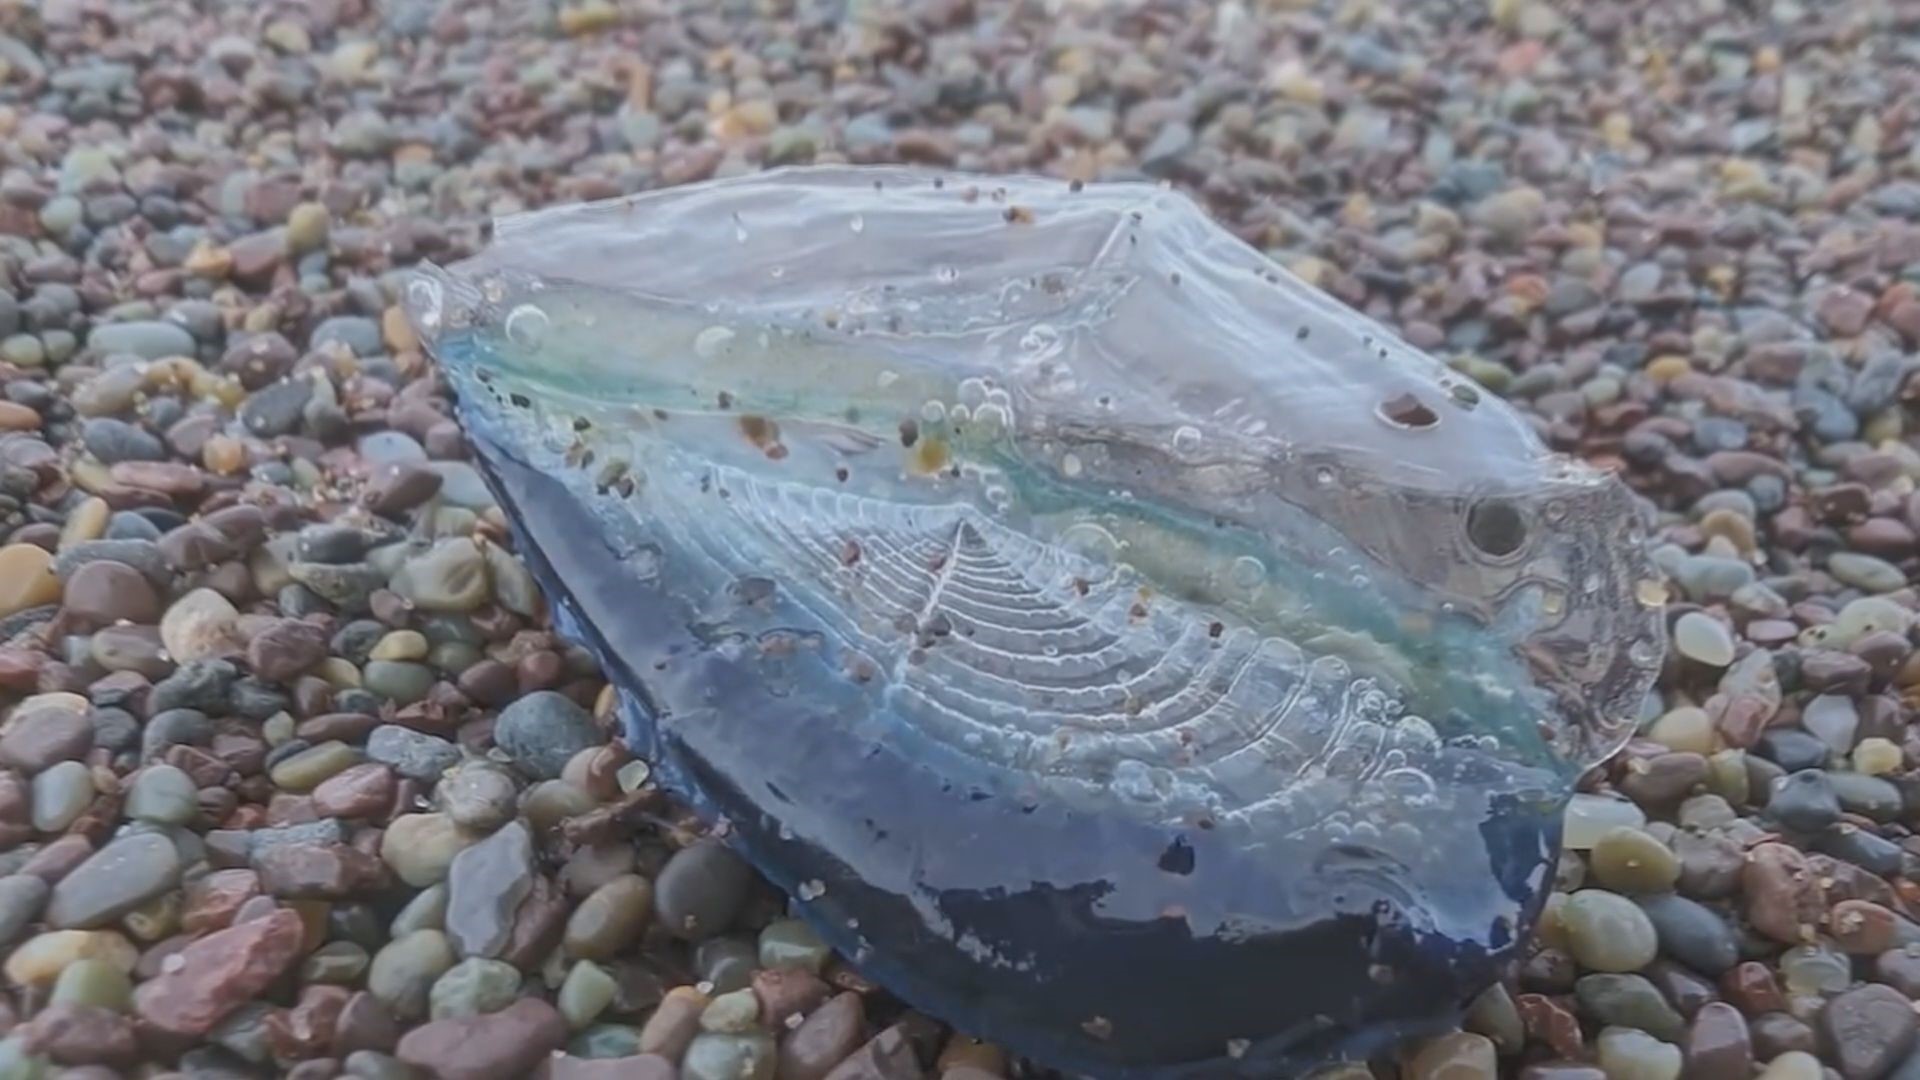 Strange sea creatures are washing ashore in California's Marin County.